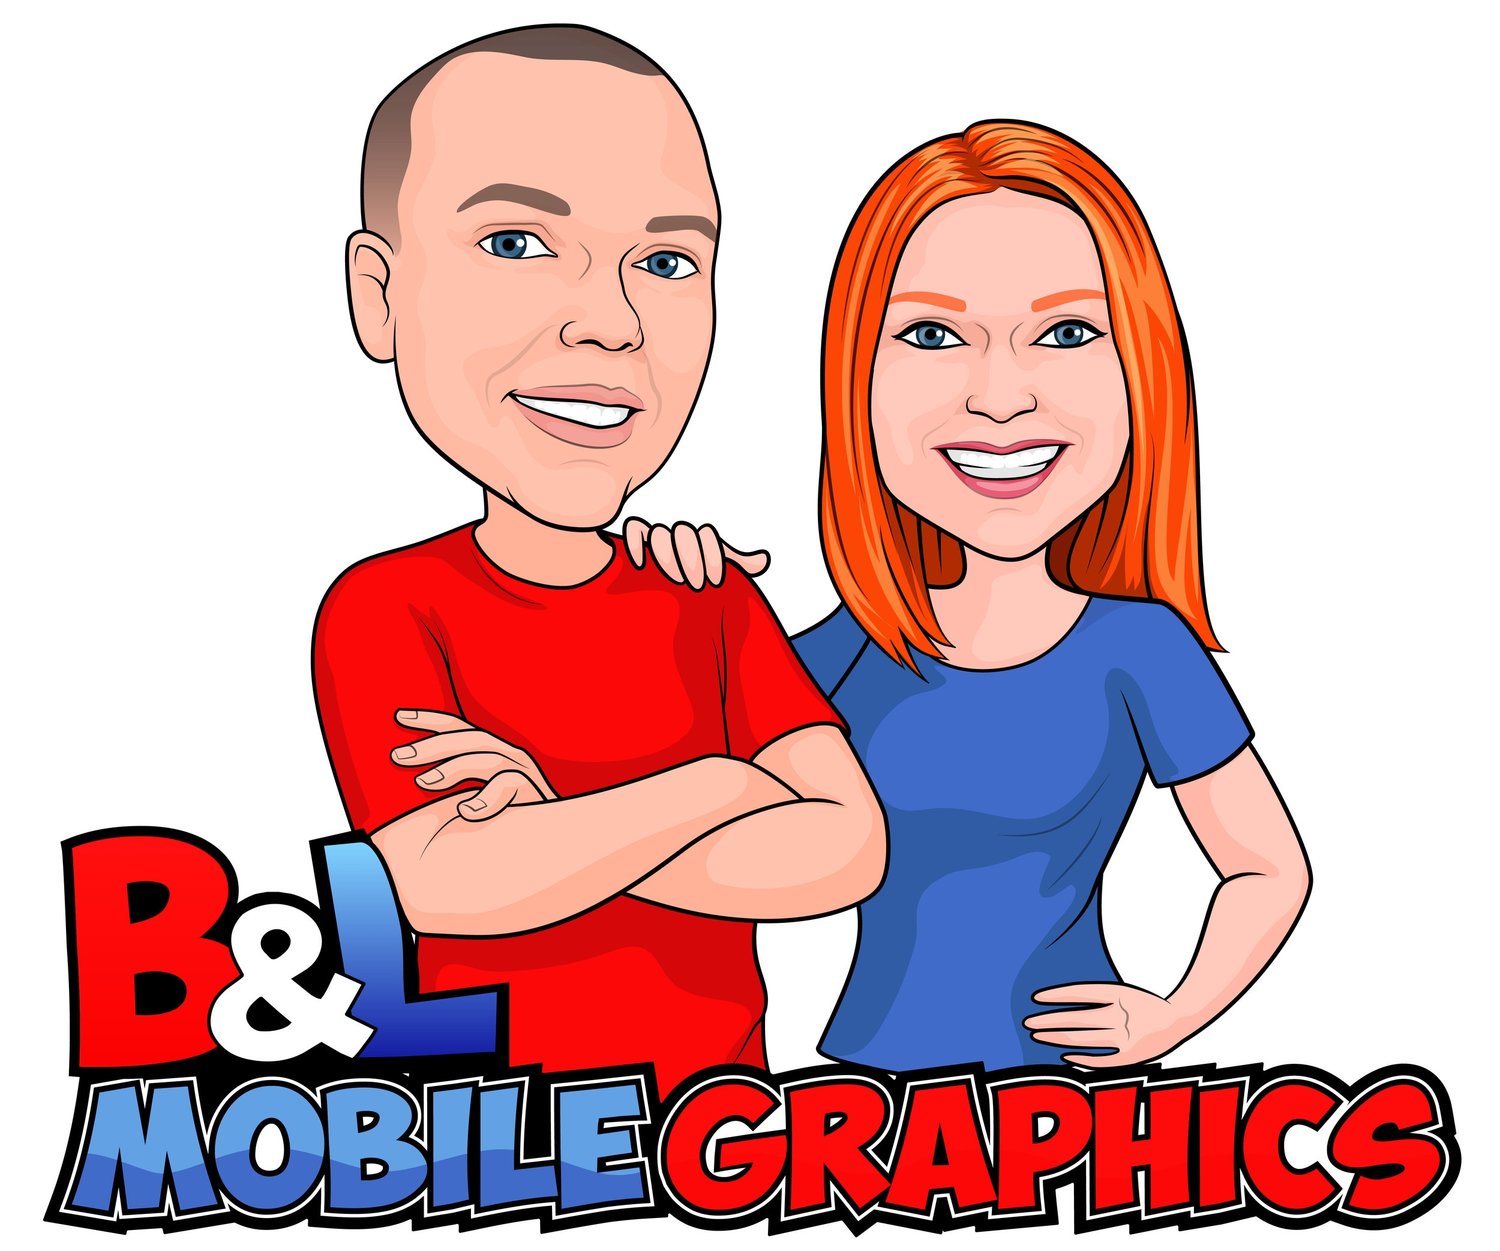 B & L Mobile Graphics